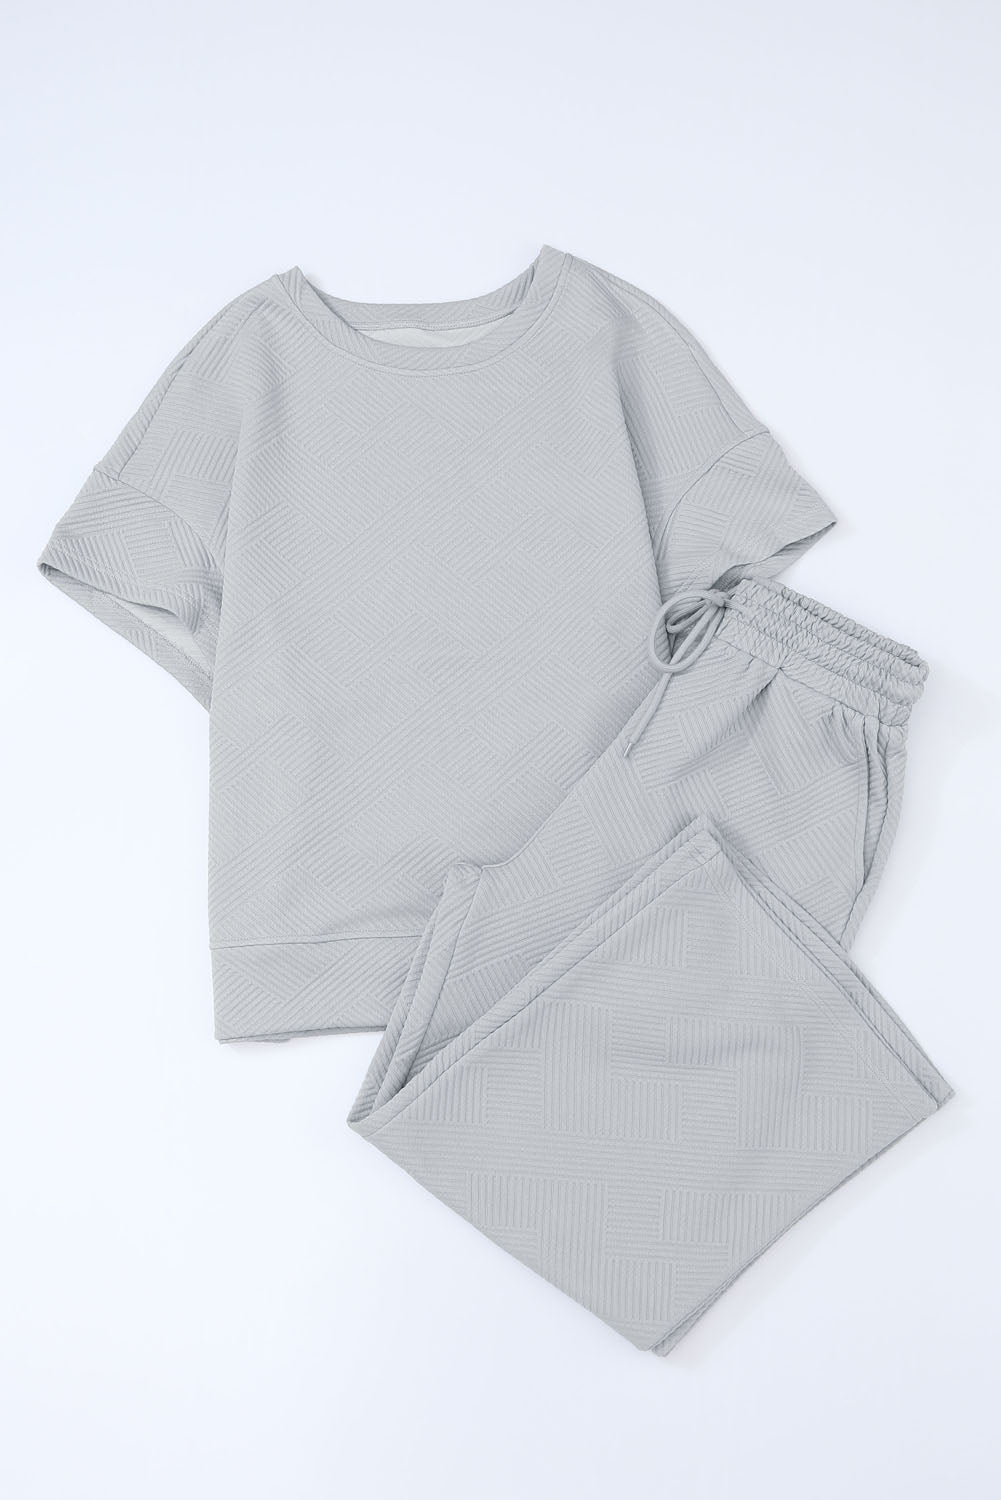 Cali Chic Gray Textured Loose Fit T Shirt and Drawstring Pants Set